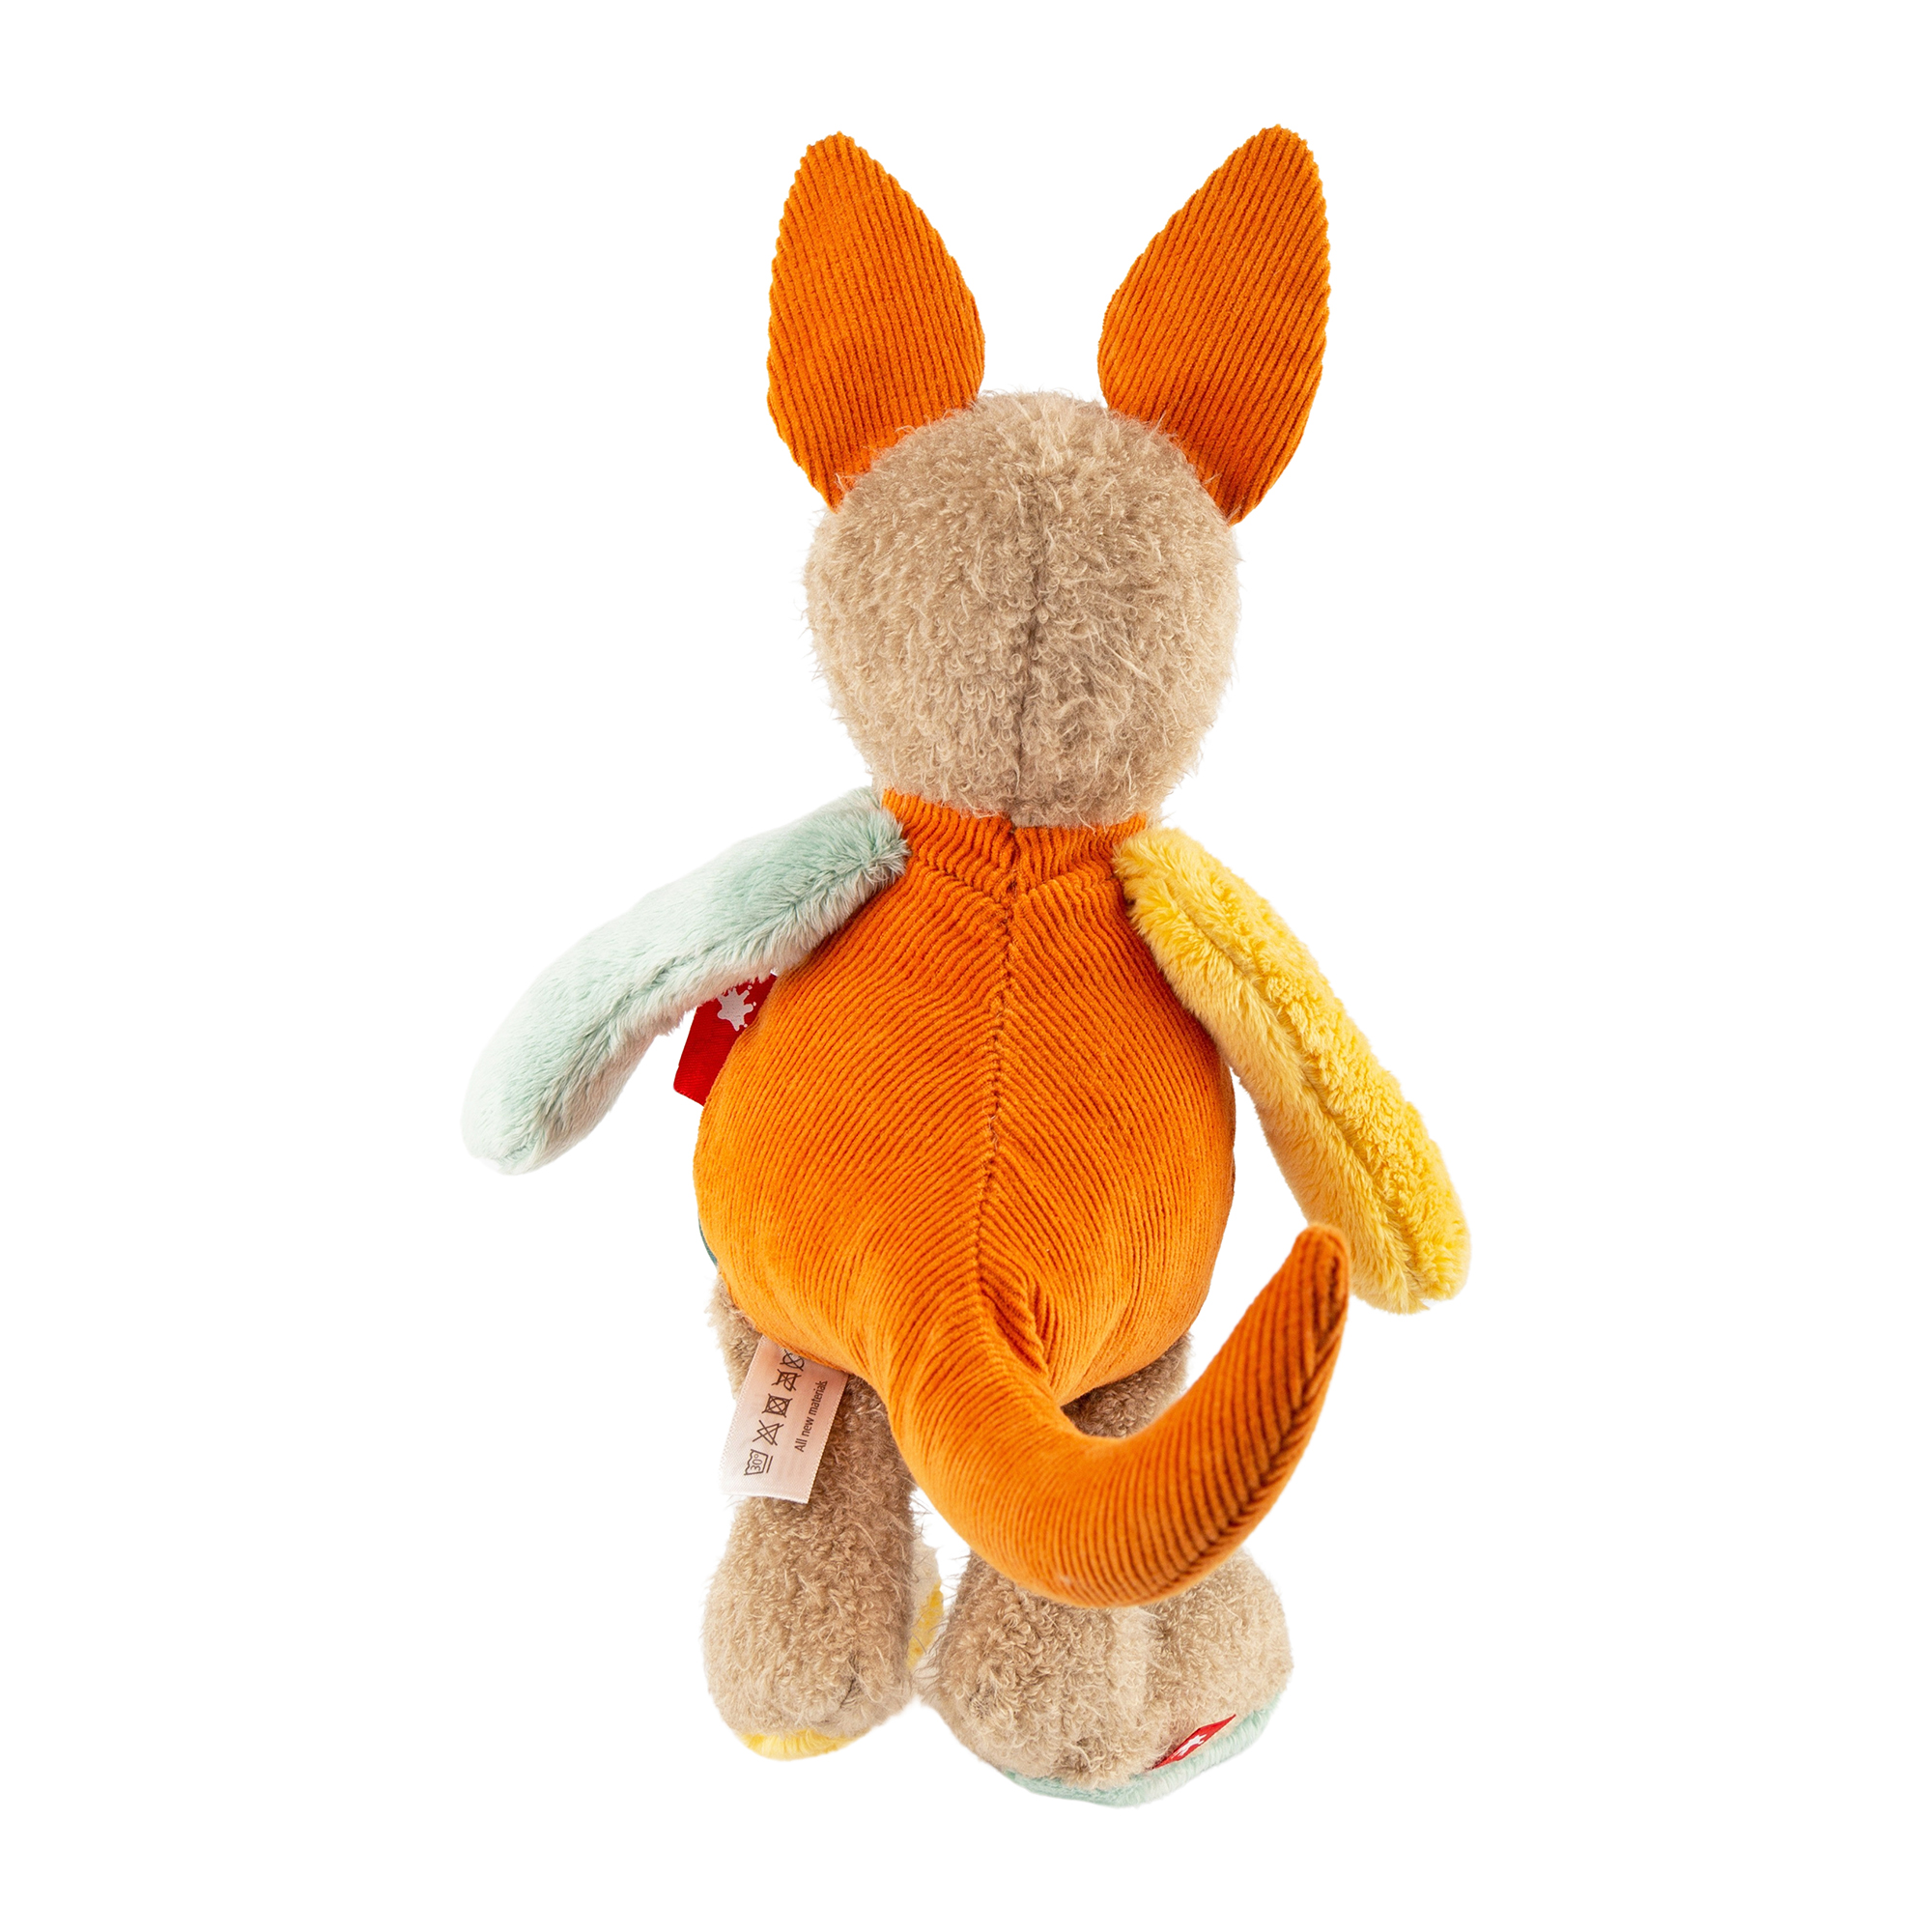 Patchwork soft toy kangaroo